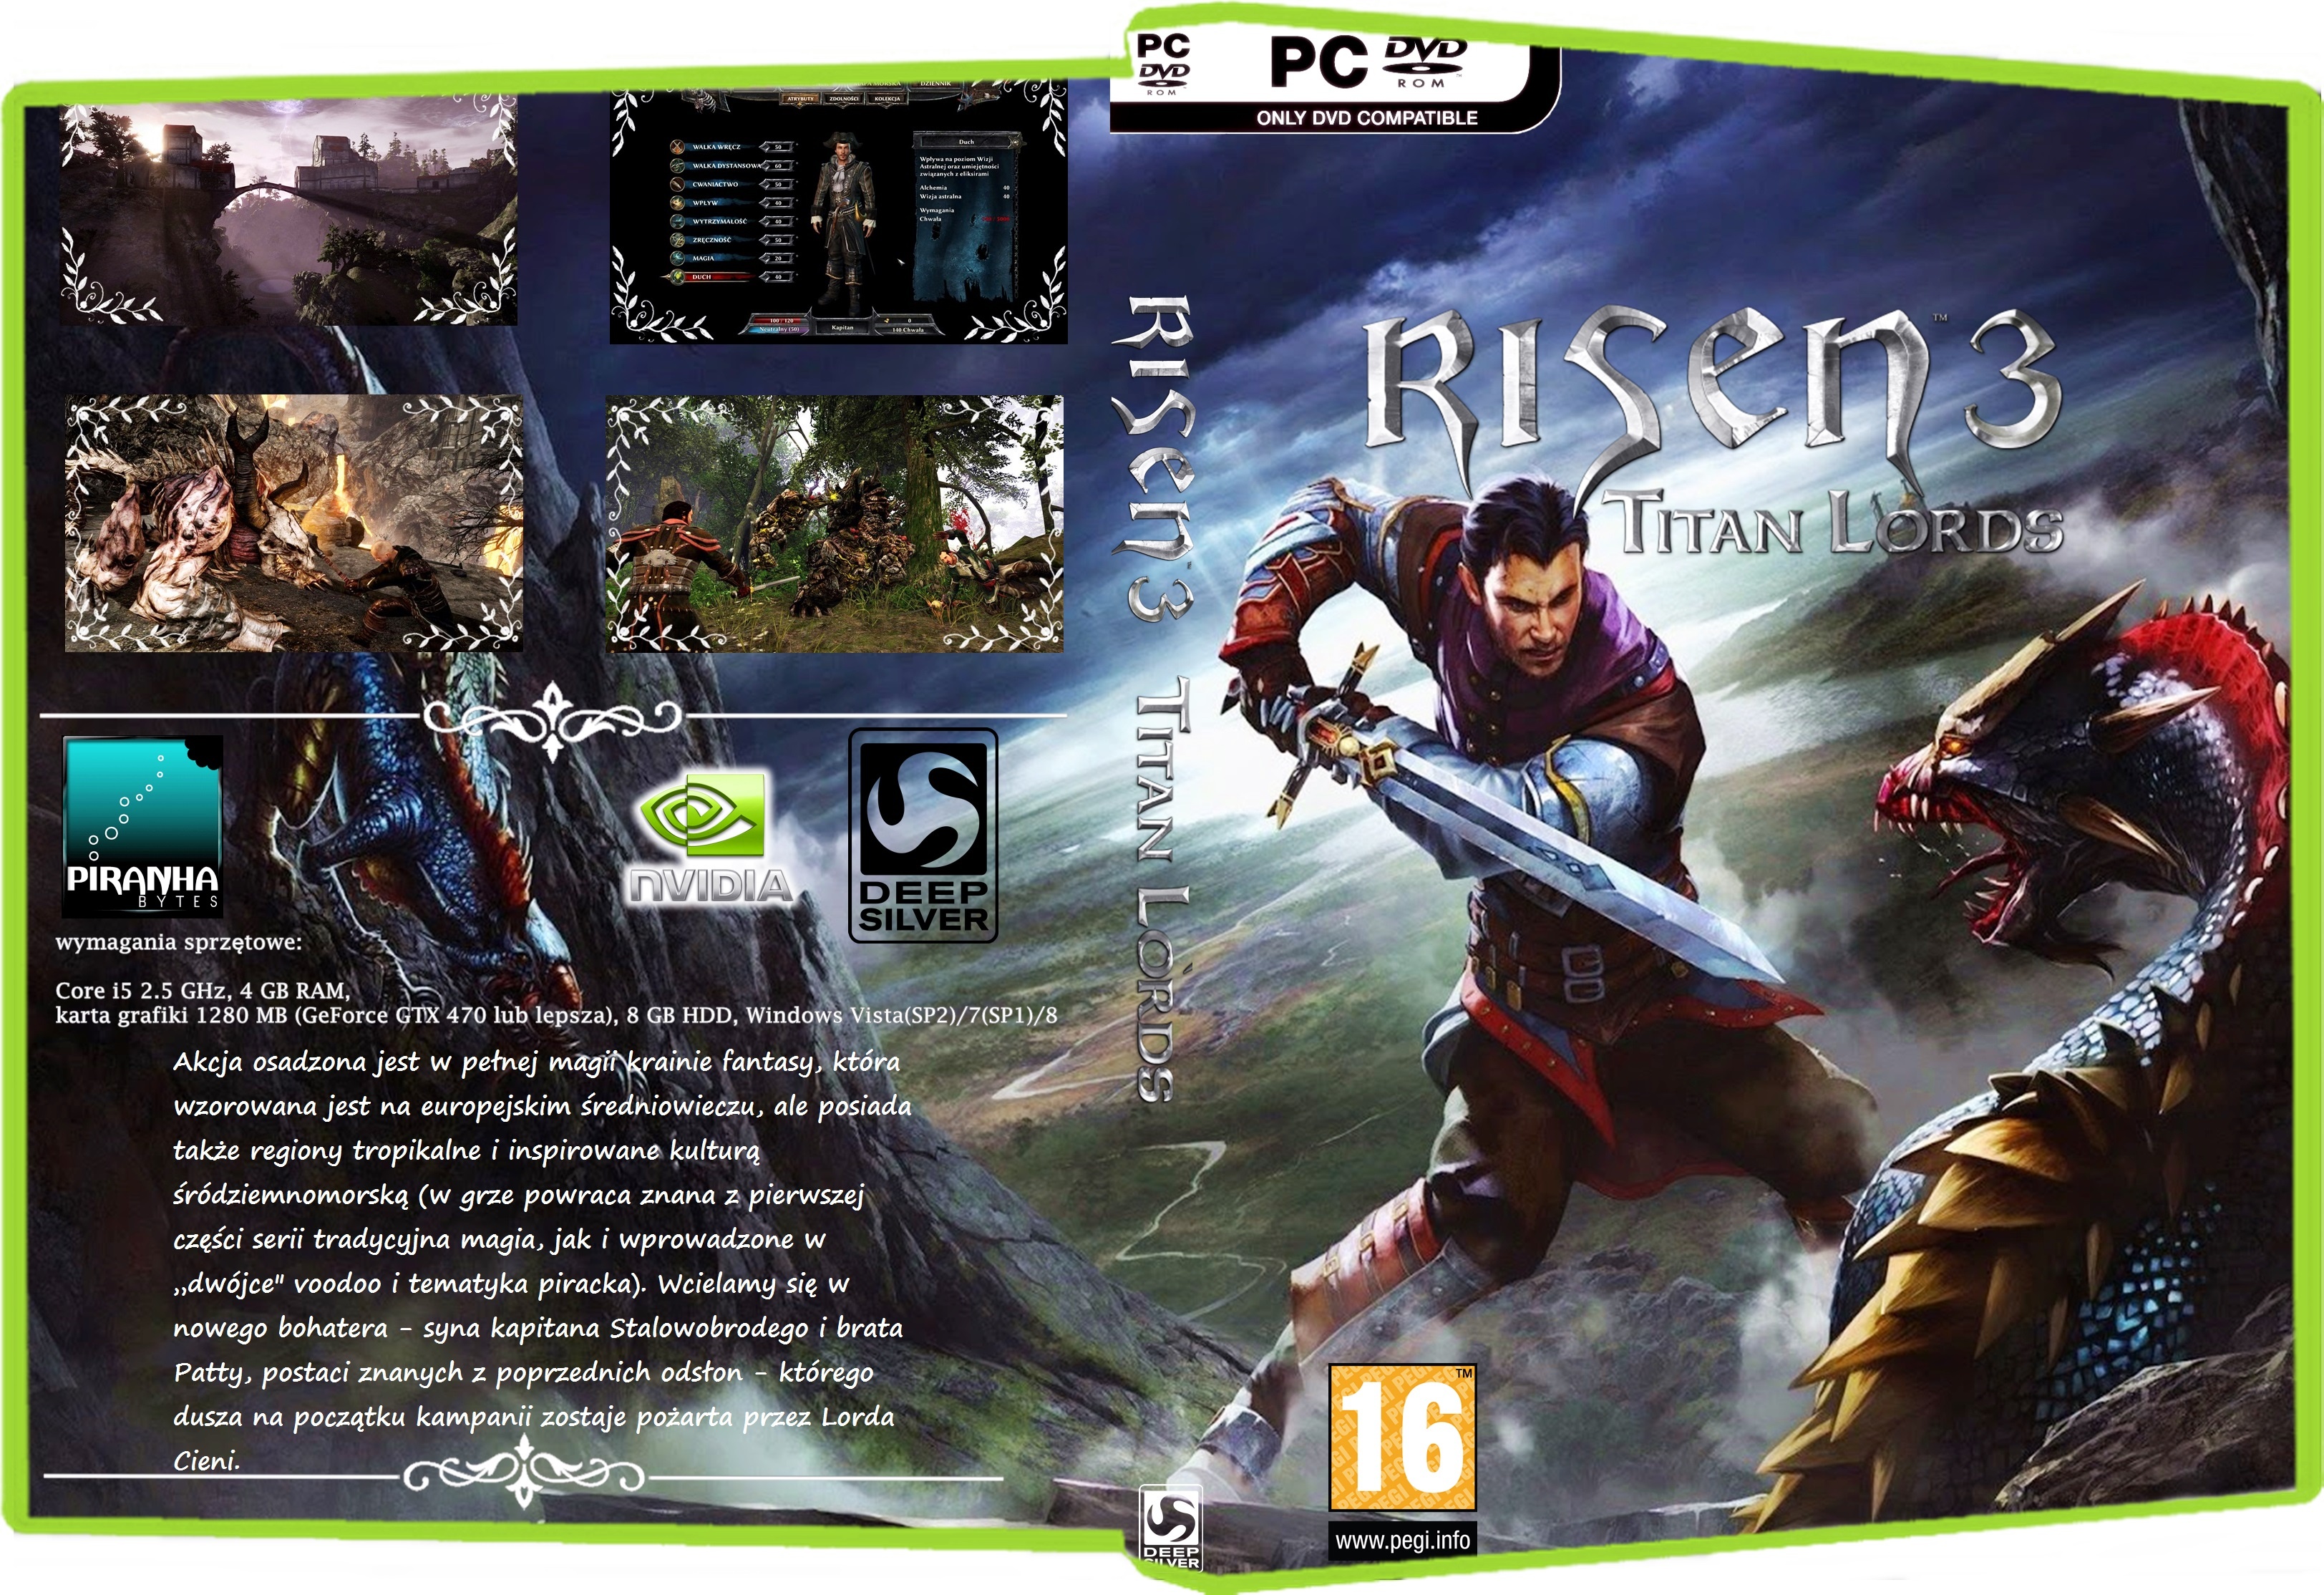 Risen 3: Titan Lords PL box cover